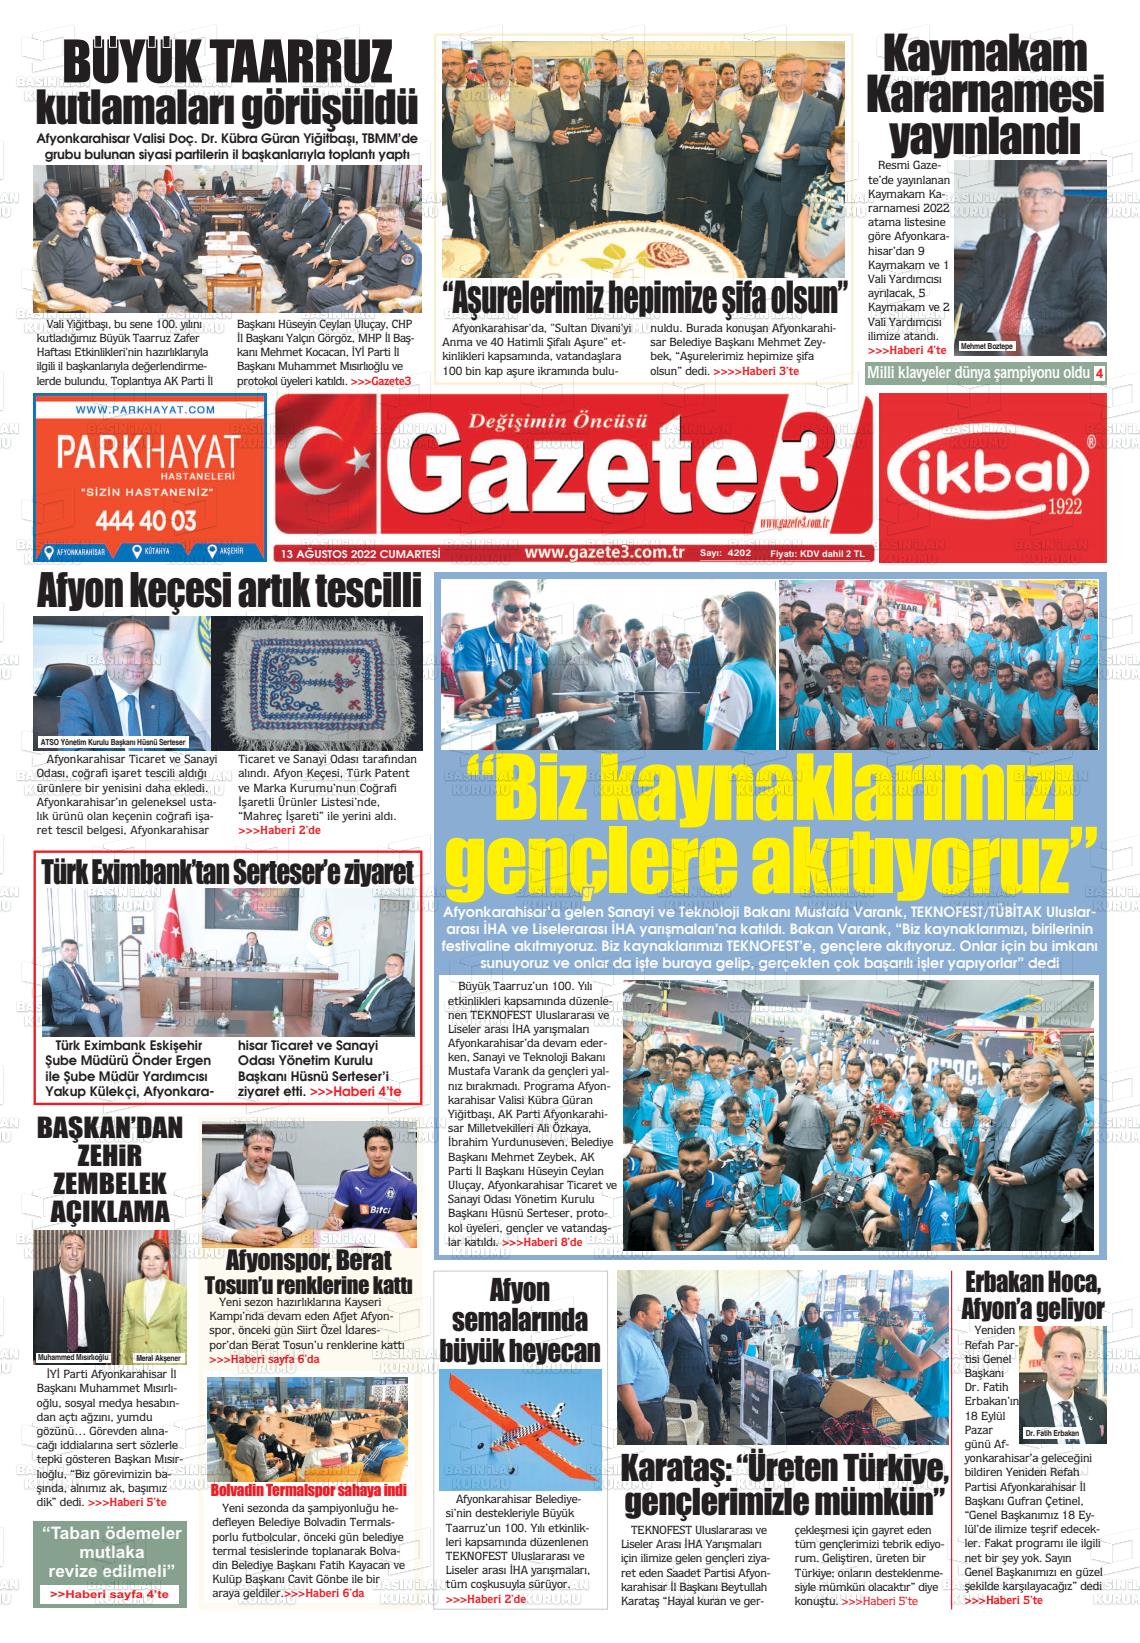 13 Ağustos 2022 Gazete 3 Gazete Manşeti